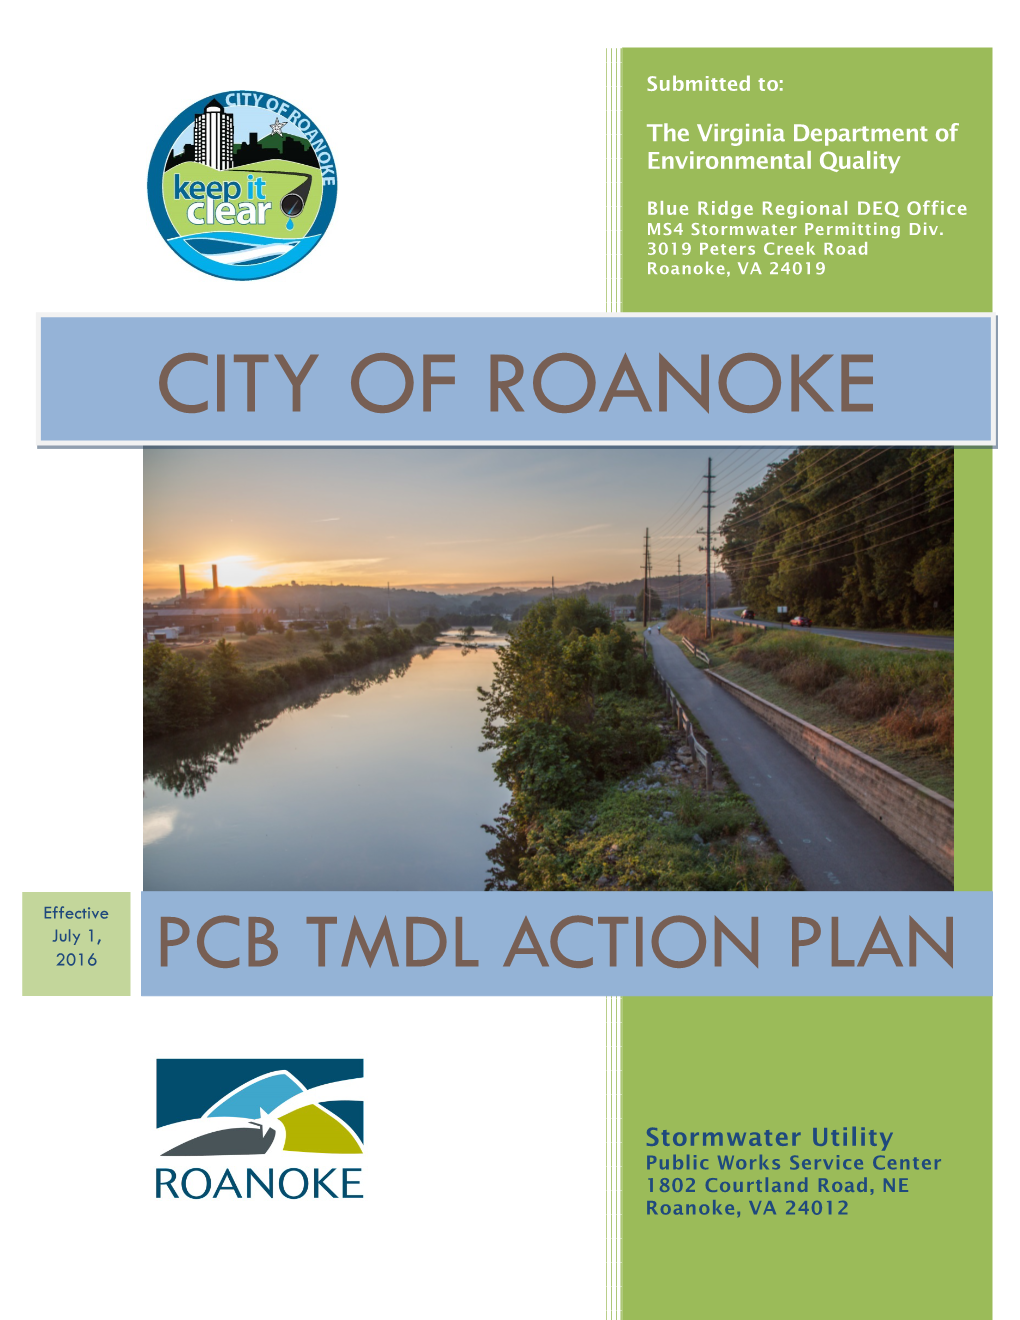 City of Roanoke PCB TMDL Action Plan